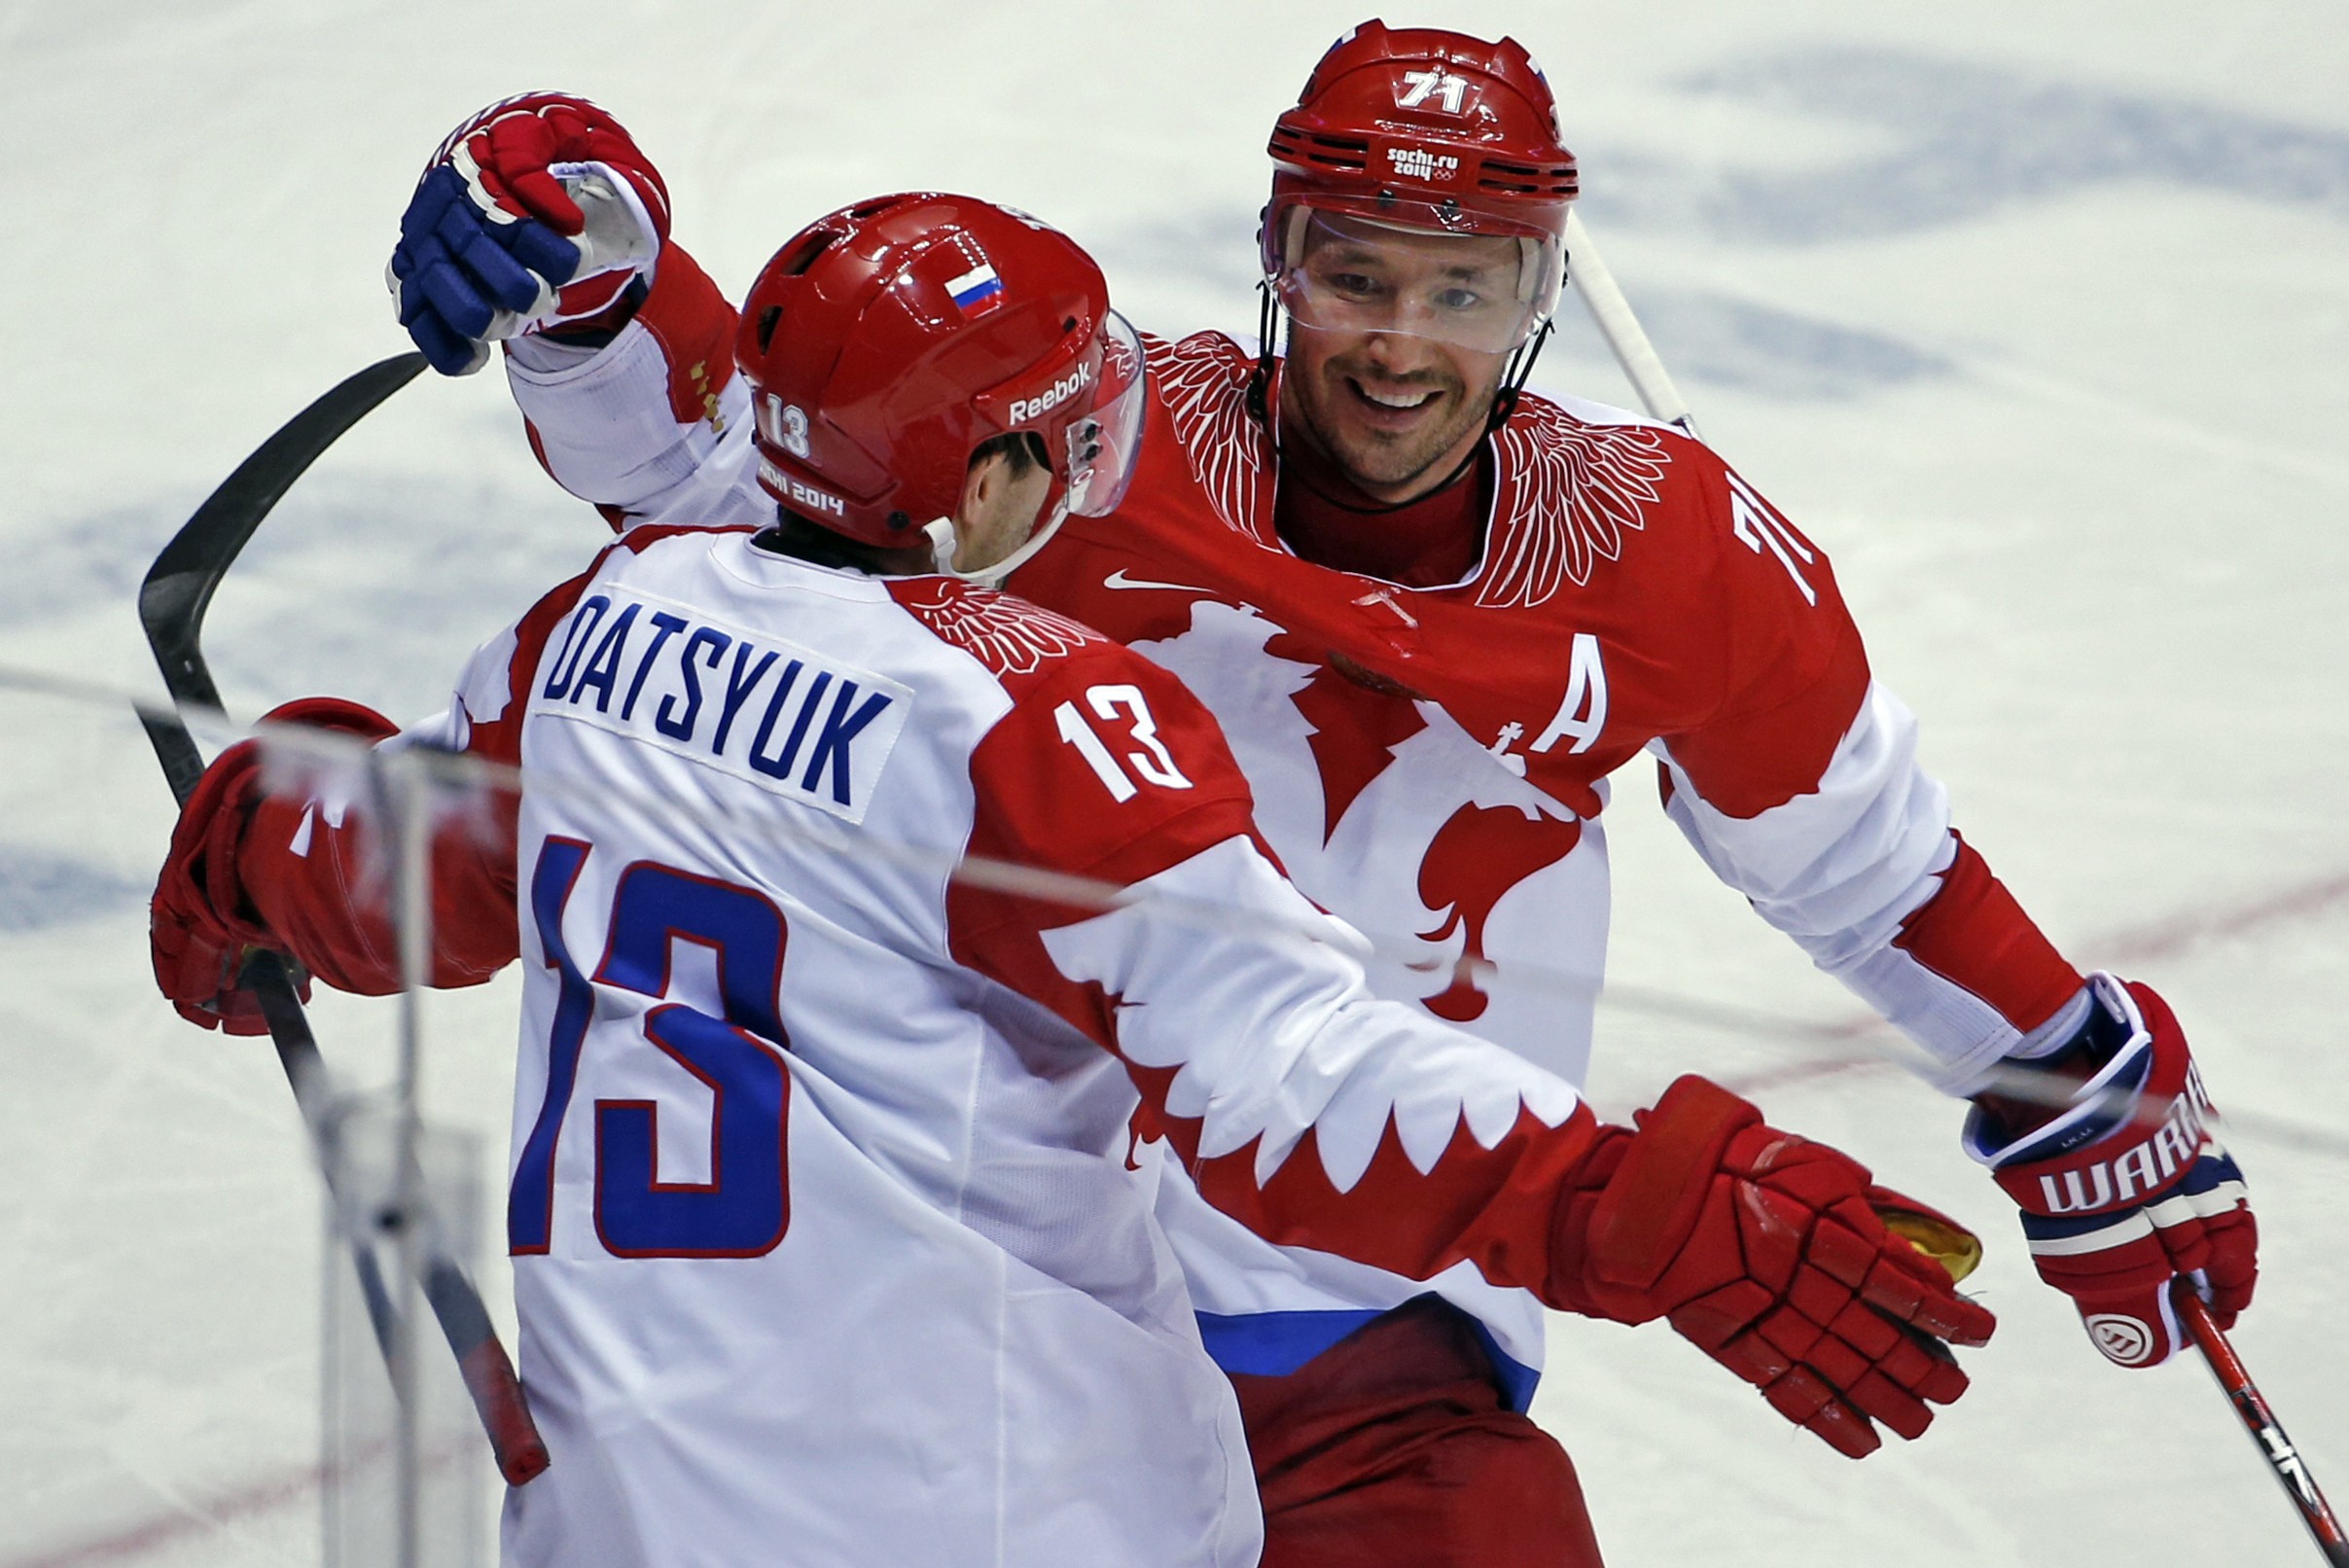 Winter Olympics 2018: US and Russian ice hockey teams brawl on the